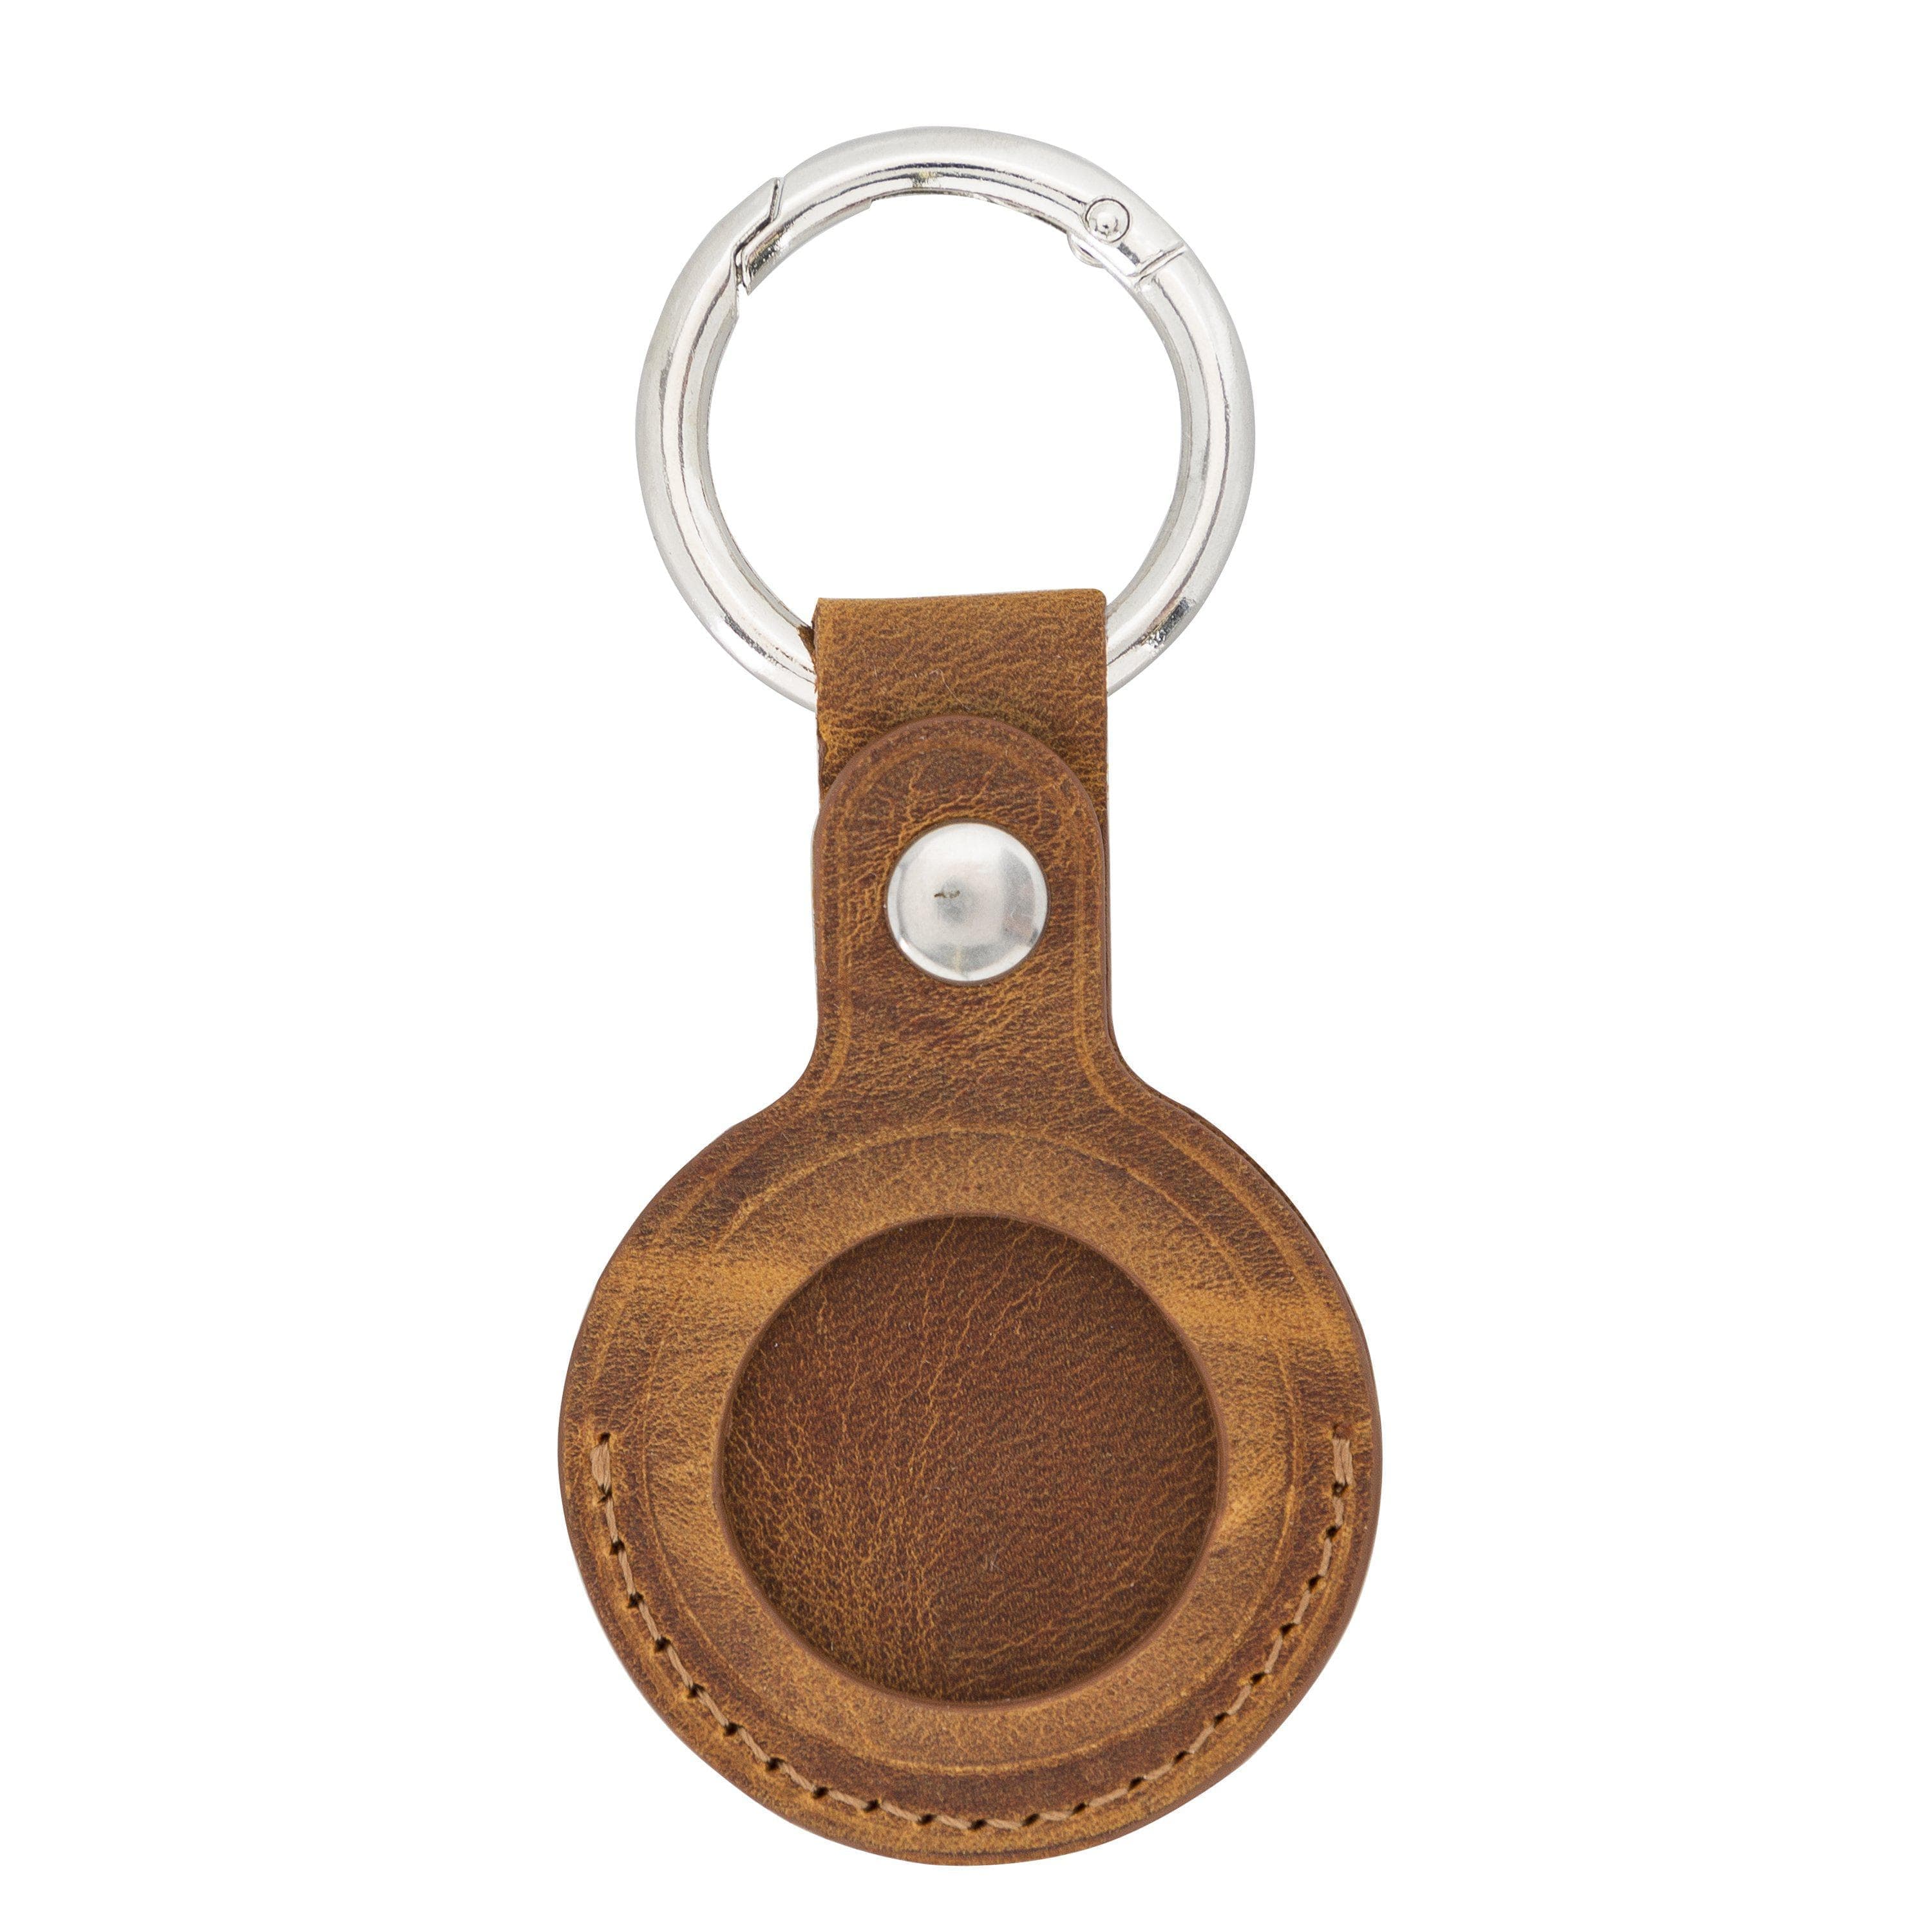 Arta Genuine Leather Keychain for Apple Airtag